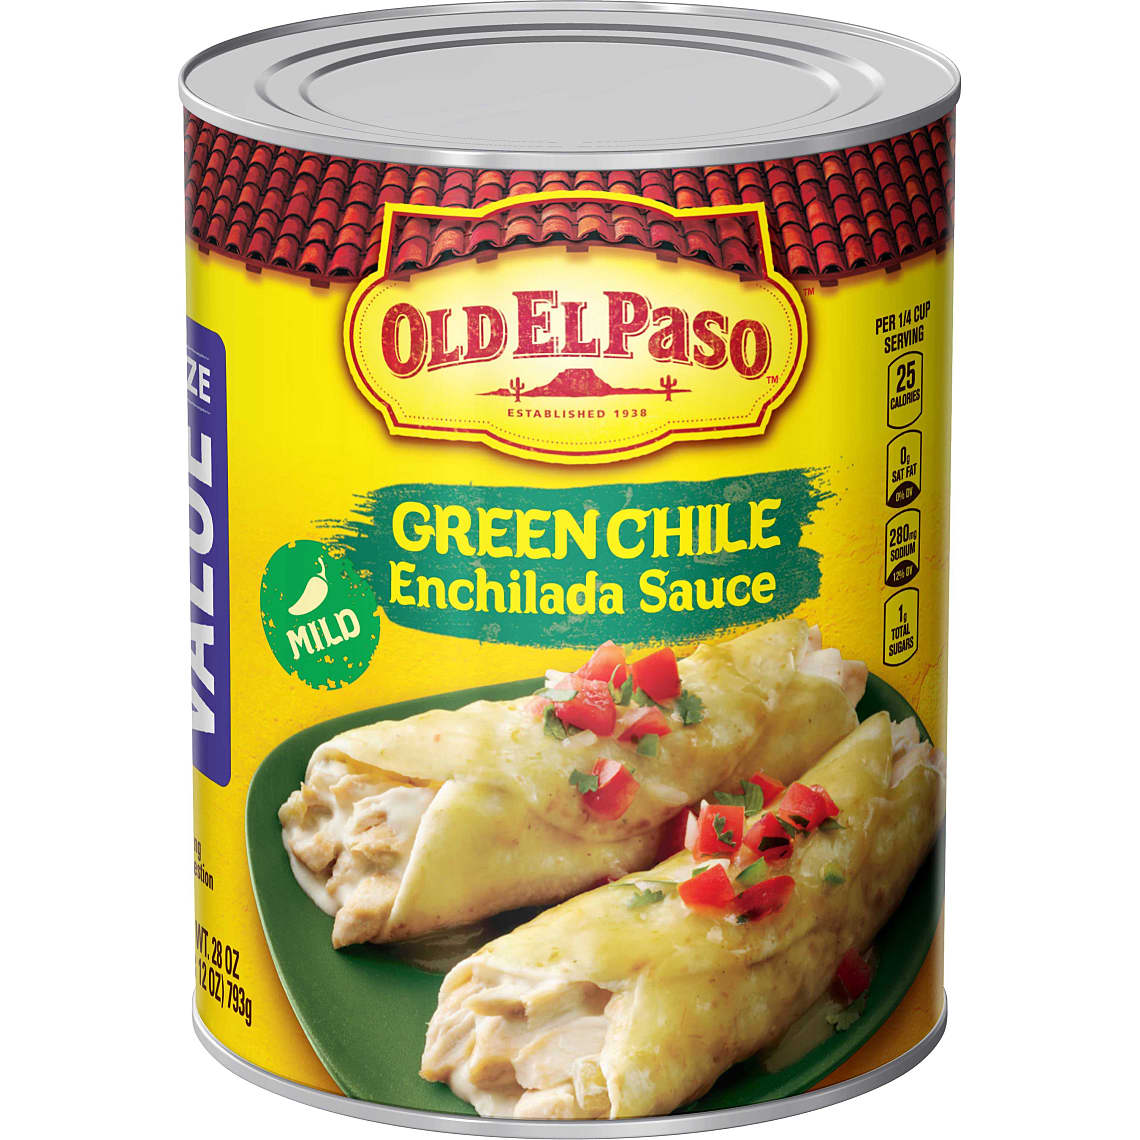 Old El Paso Mild Green Chile Enchilada Sauce, 28 oz